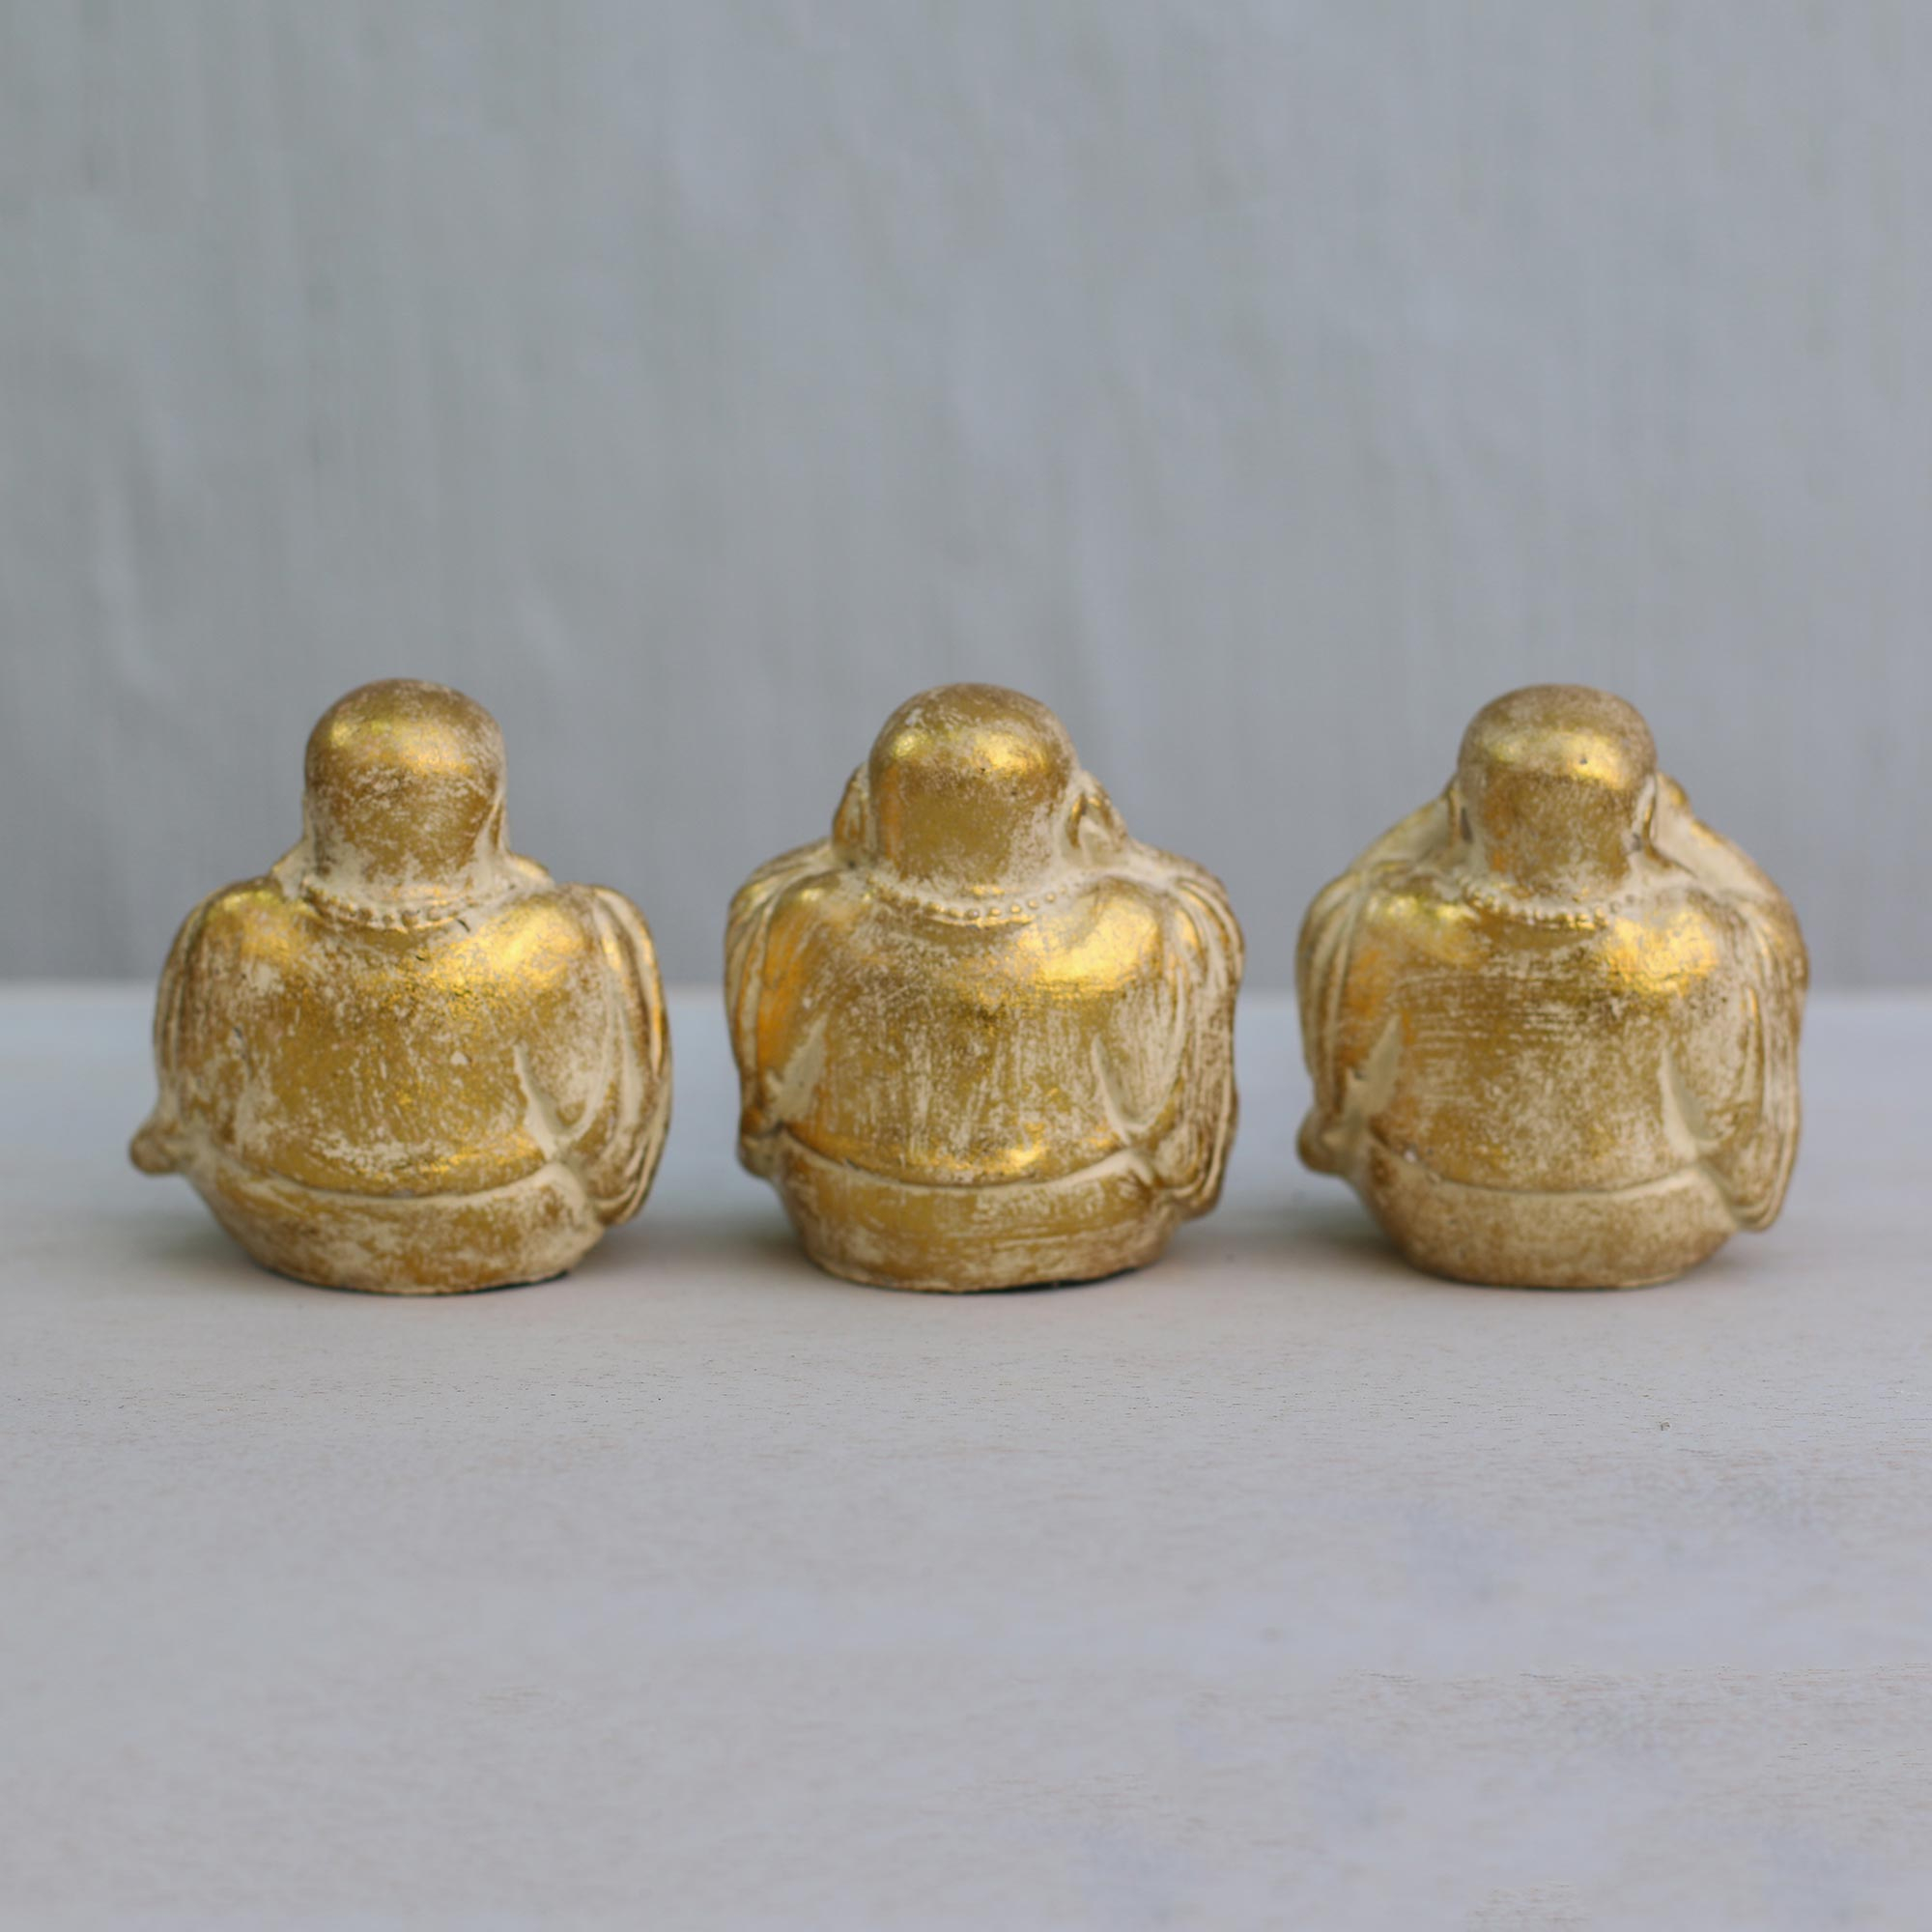 Three Gold-Tone Resin Buddha Figurines from Bali - Charming Buddhas ...